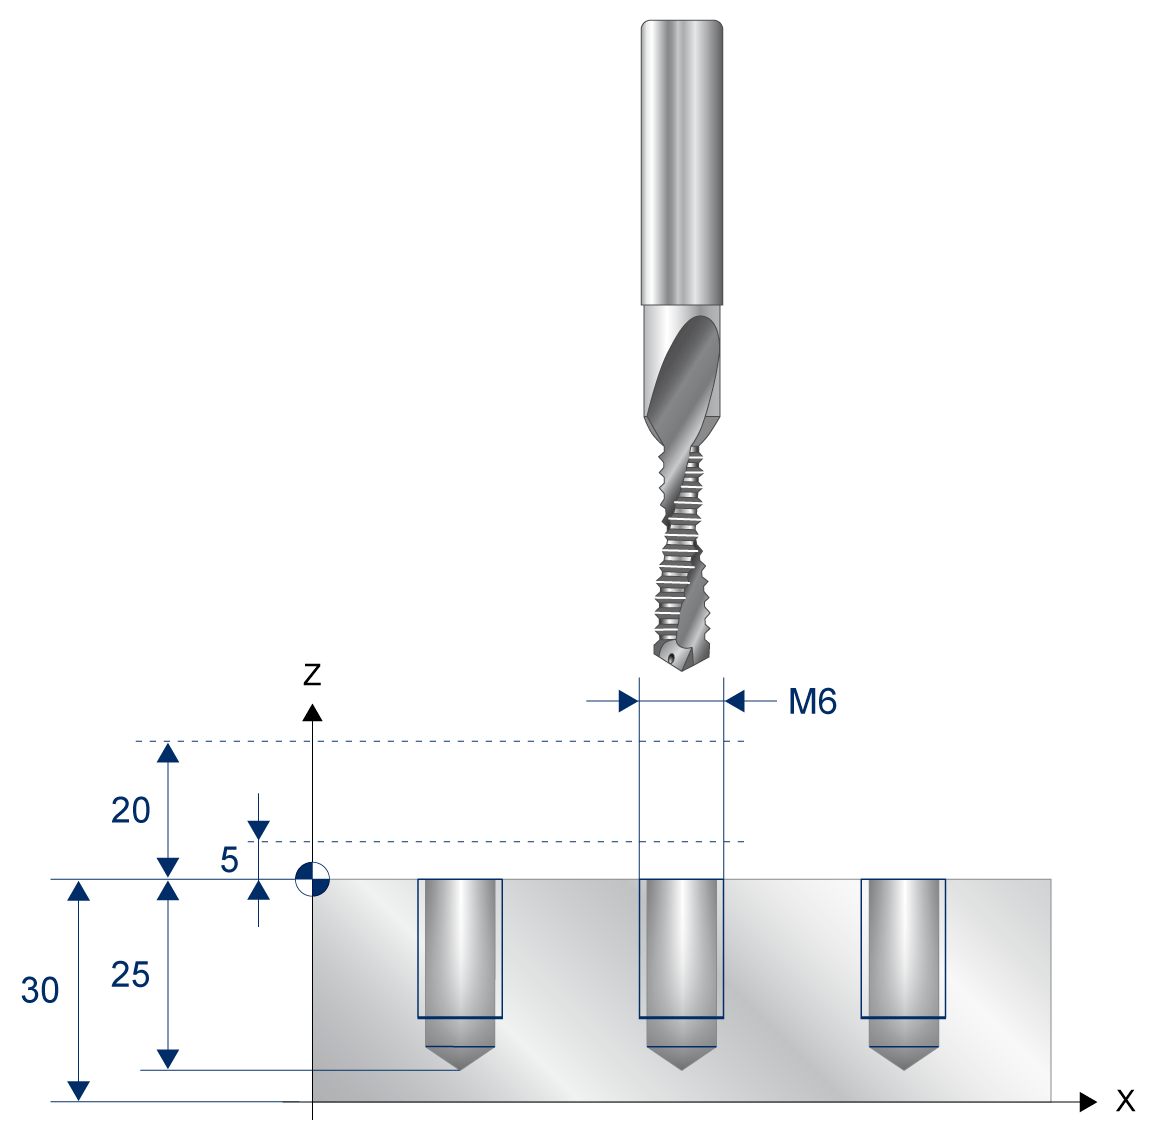 Programming example: Drill thread milling